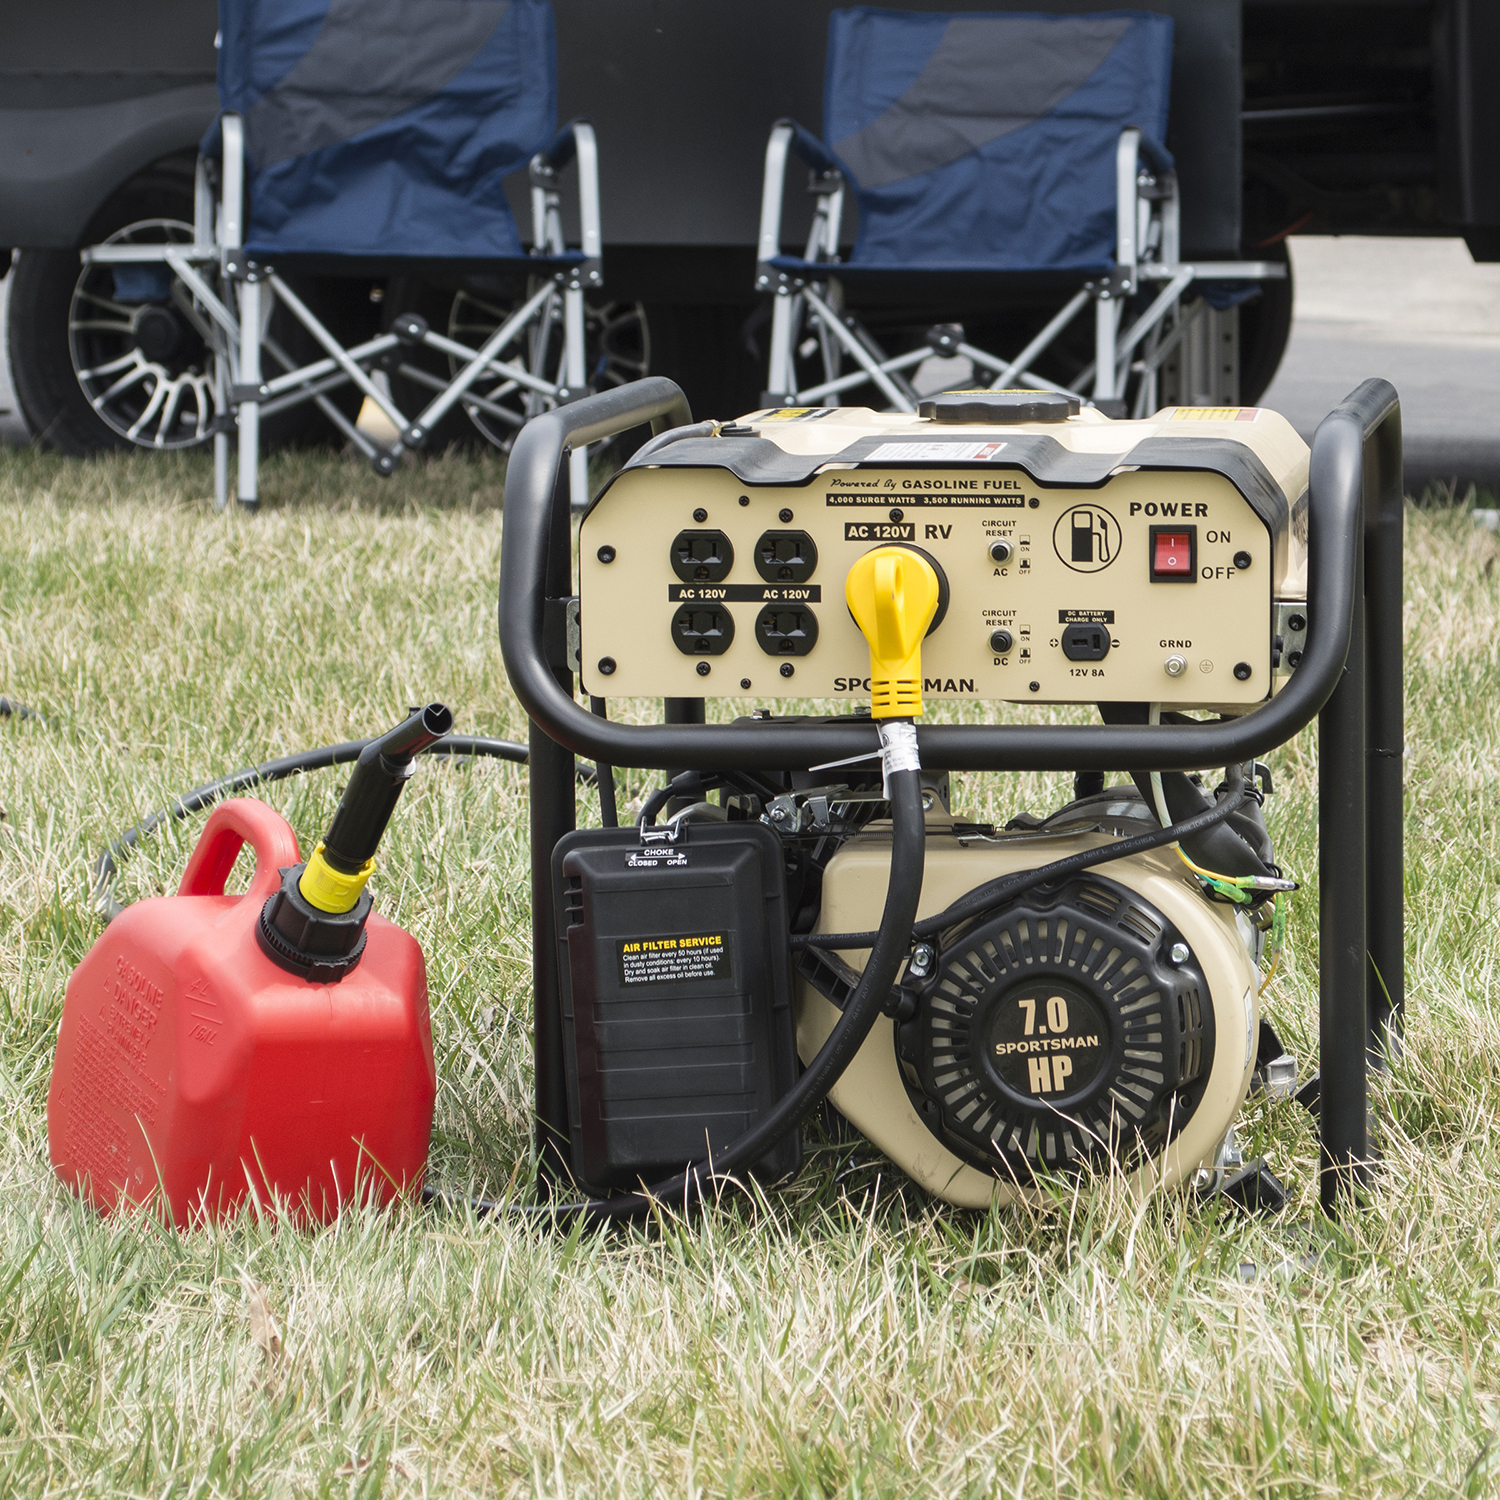 Portable power outdoor generator